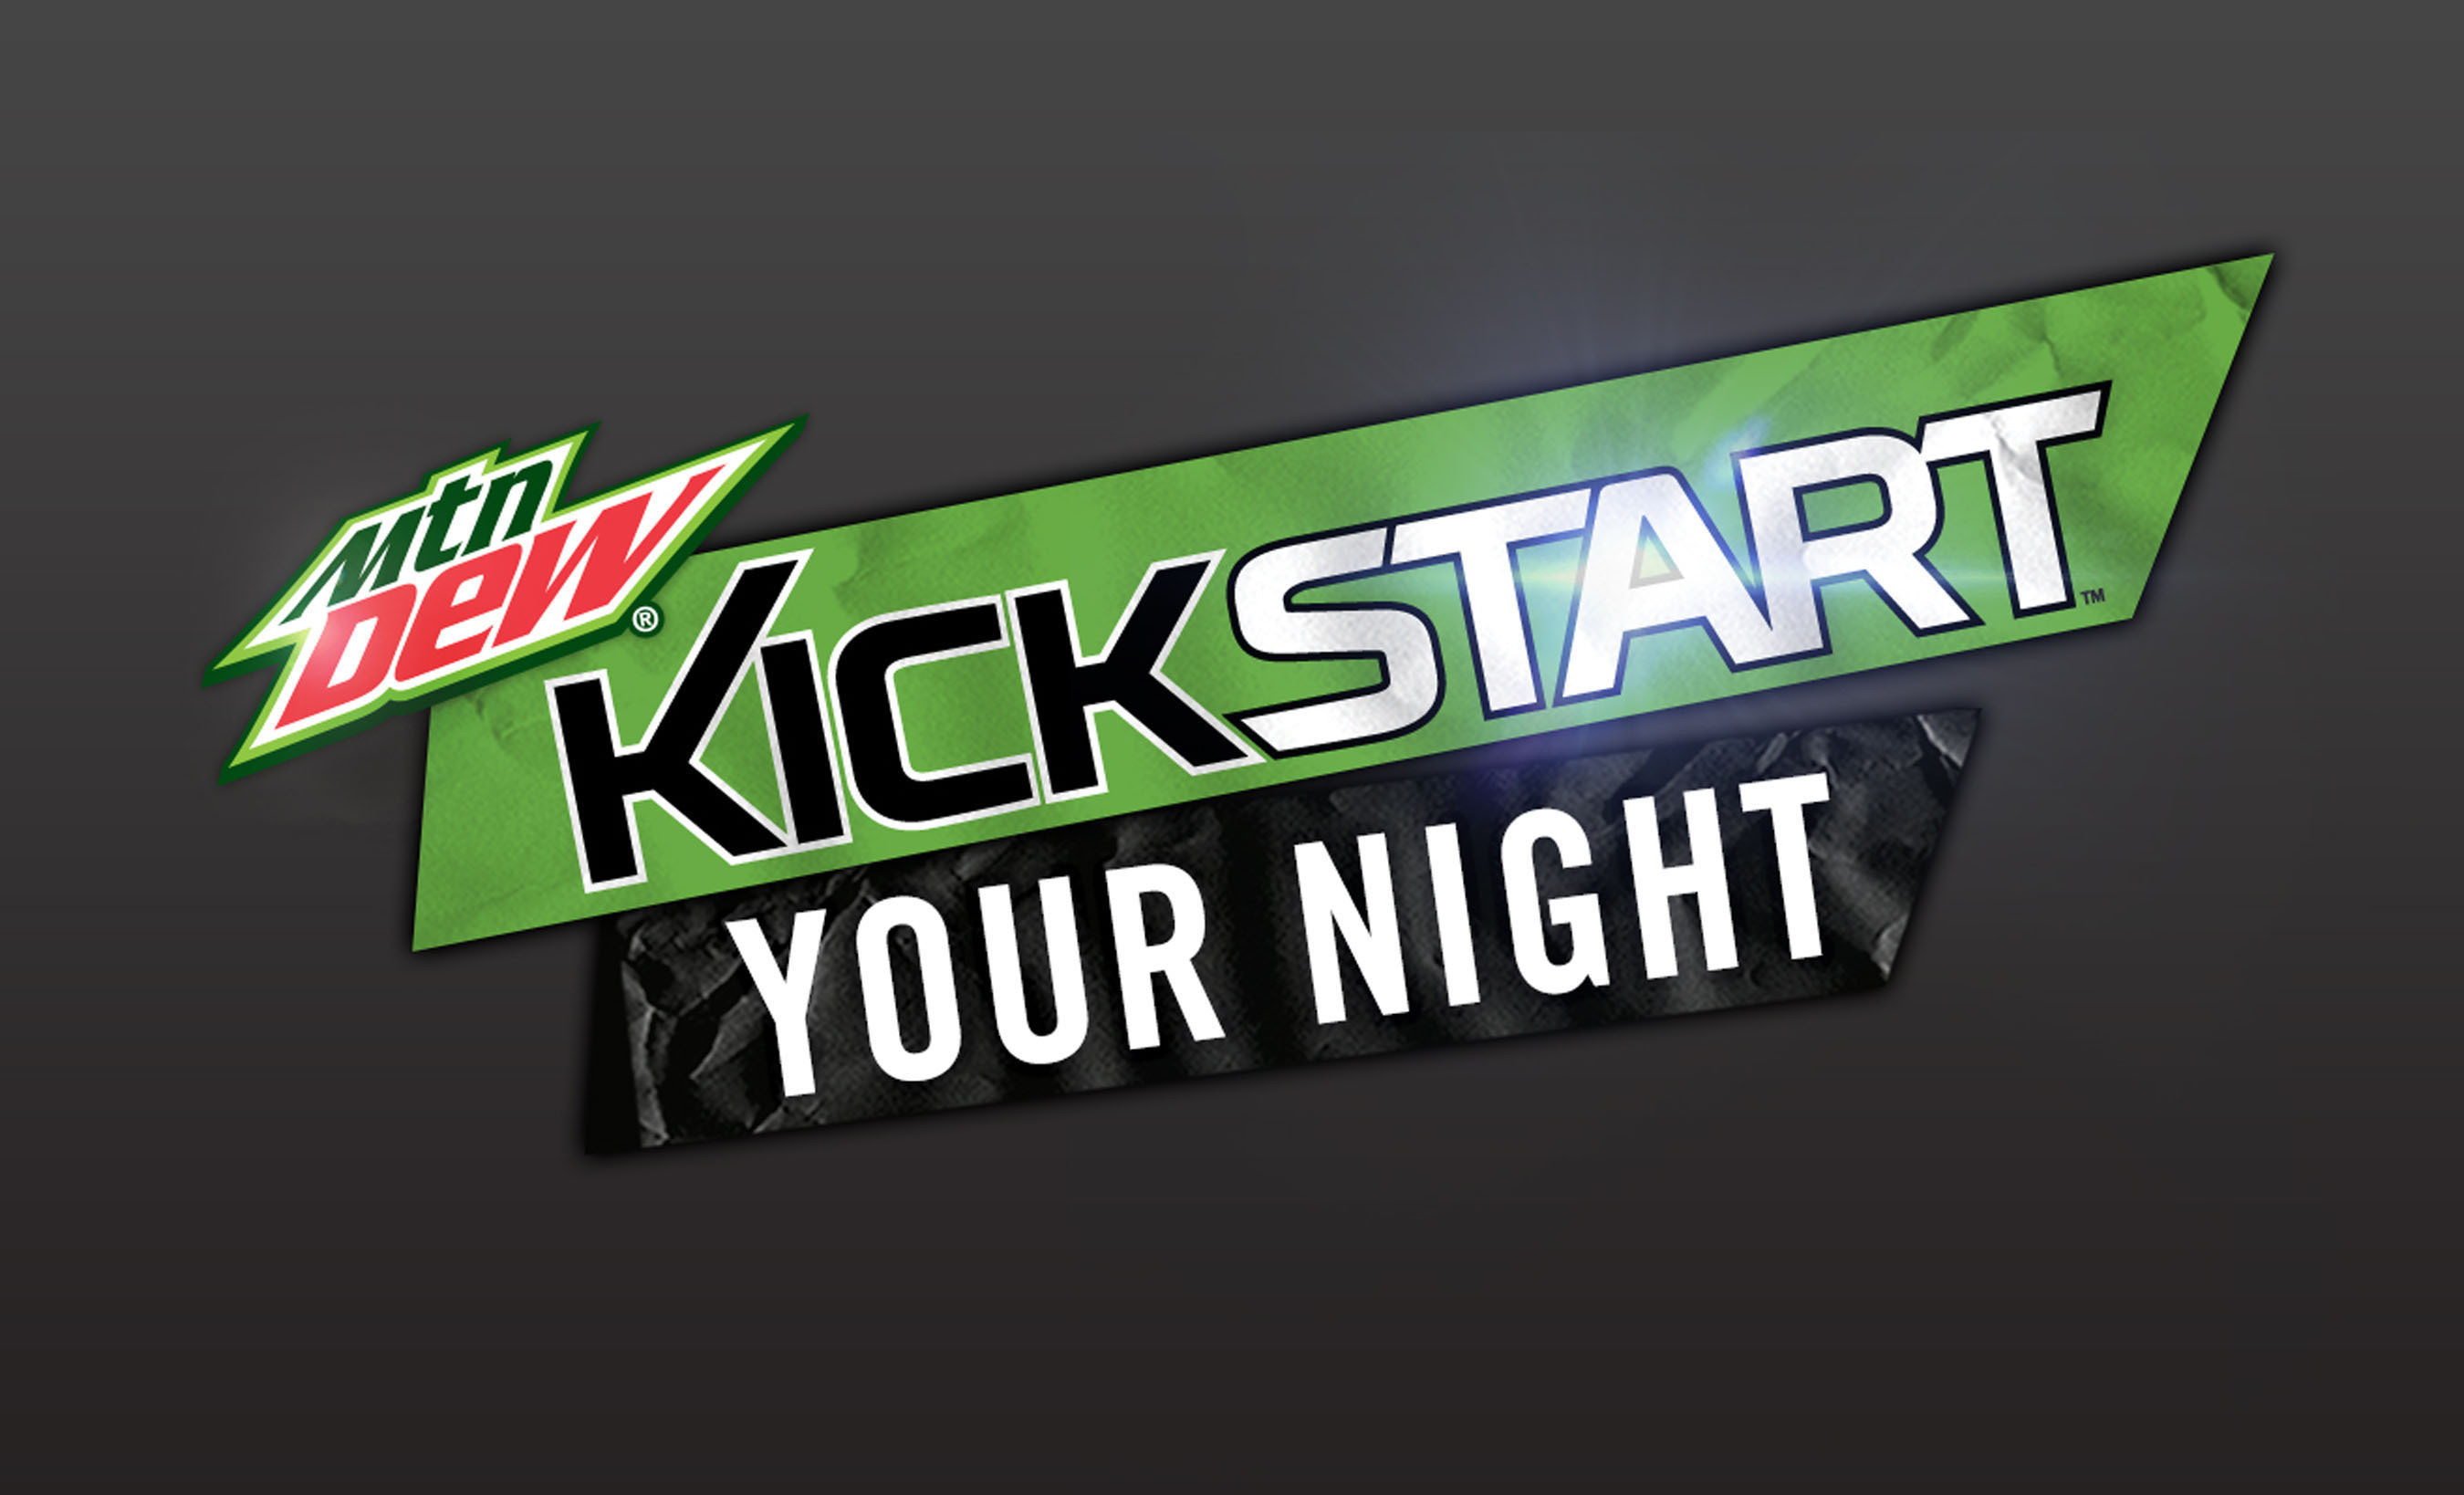 2700x1638 Mountain Dew Kickstart Doubles Lineup With New Flavors To Kickstart Your  Night